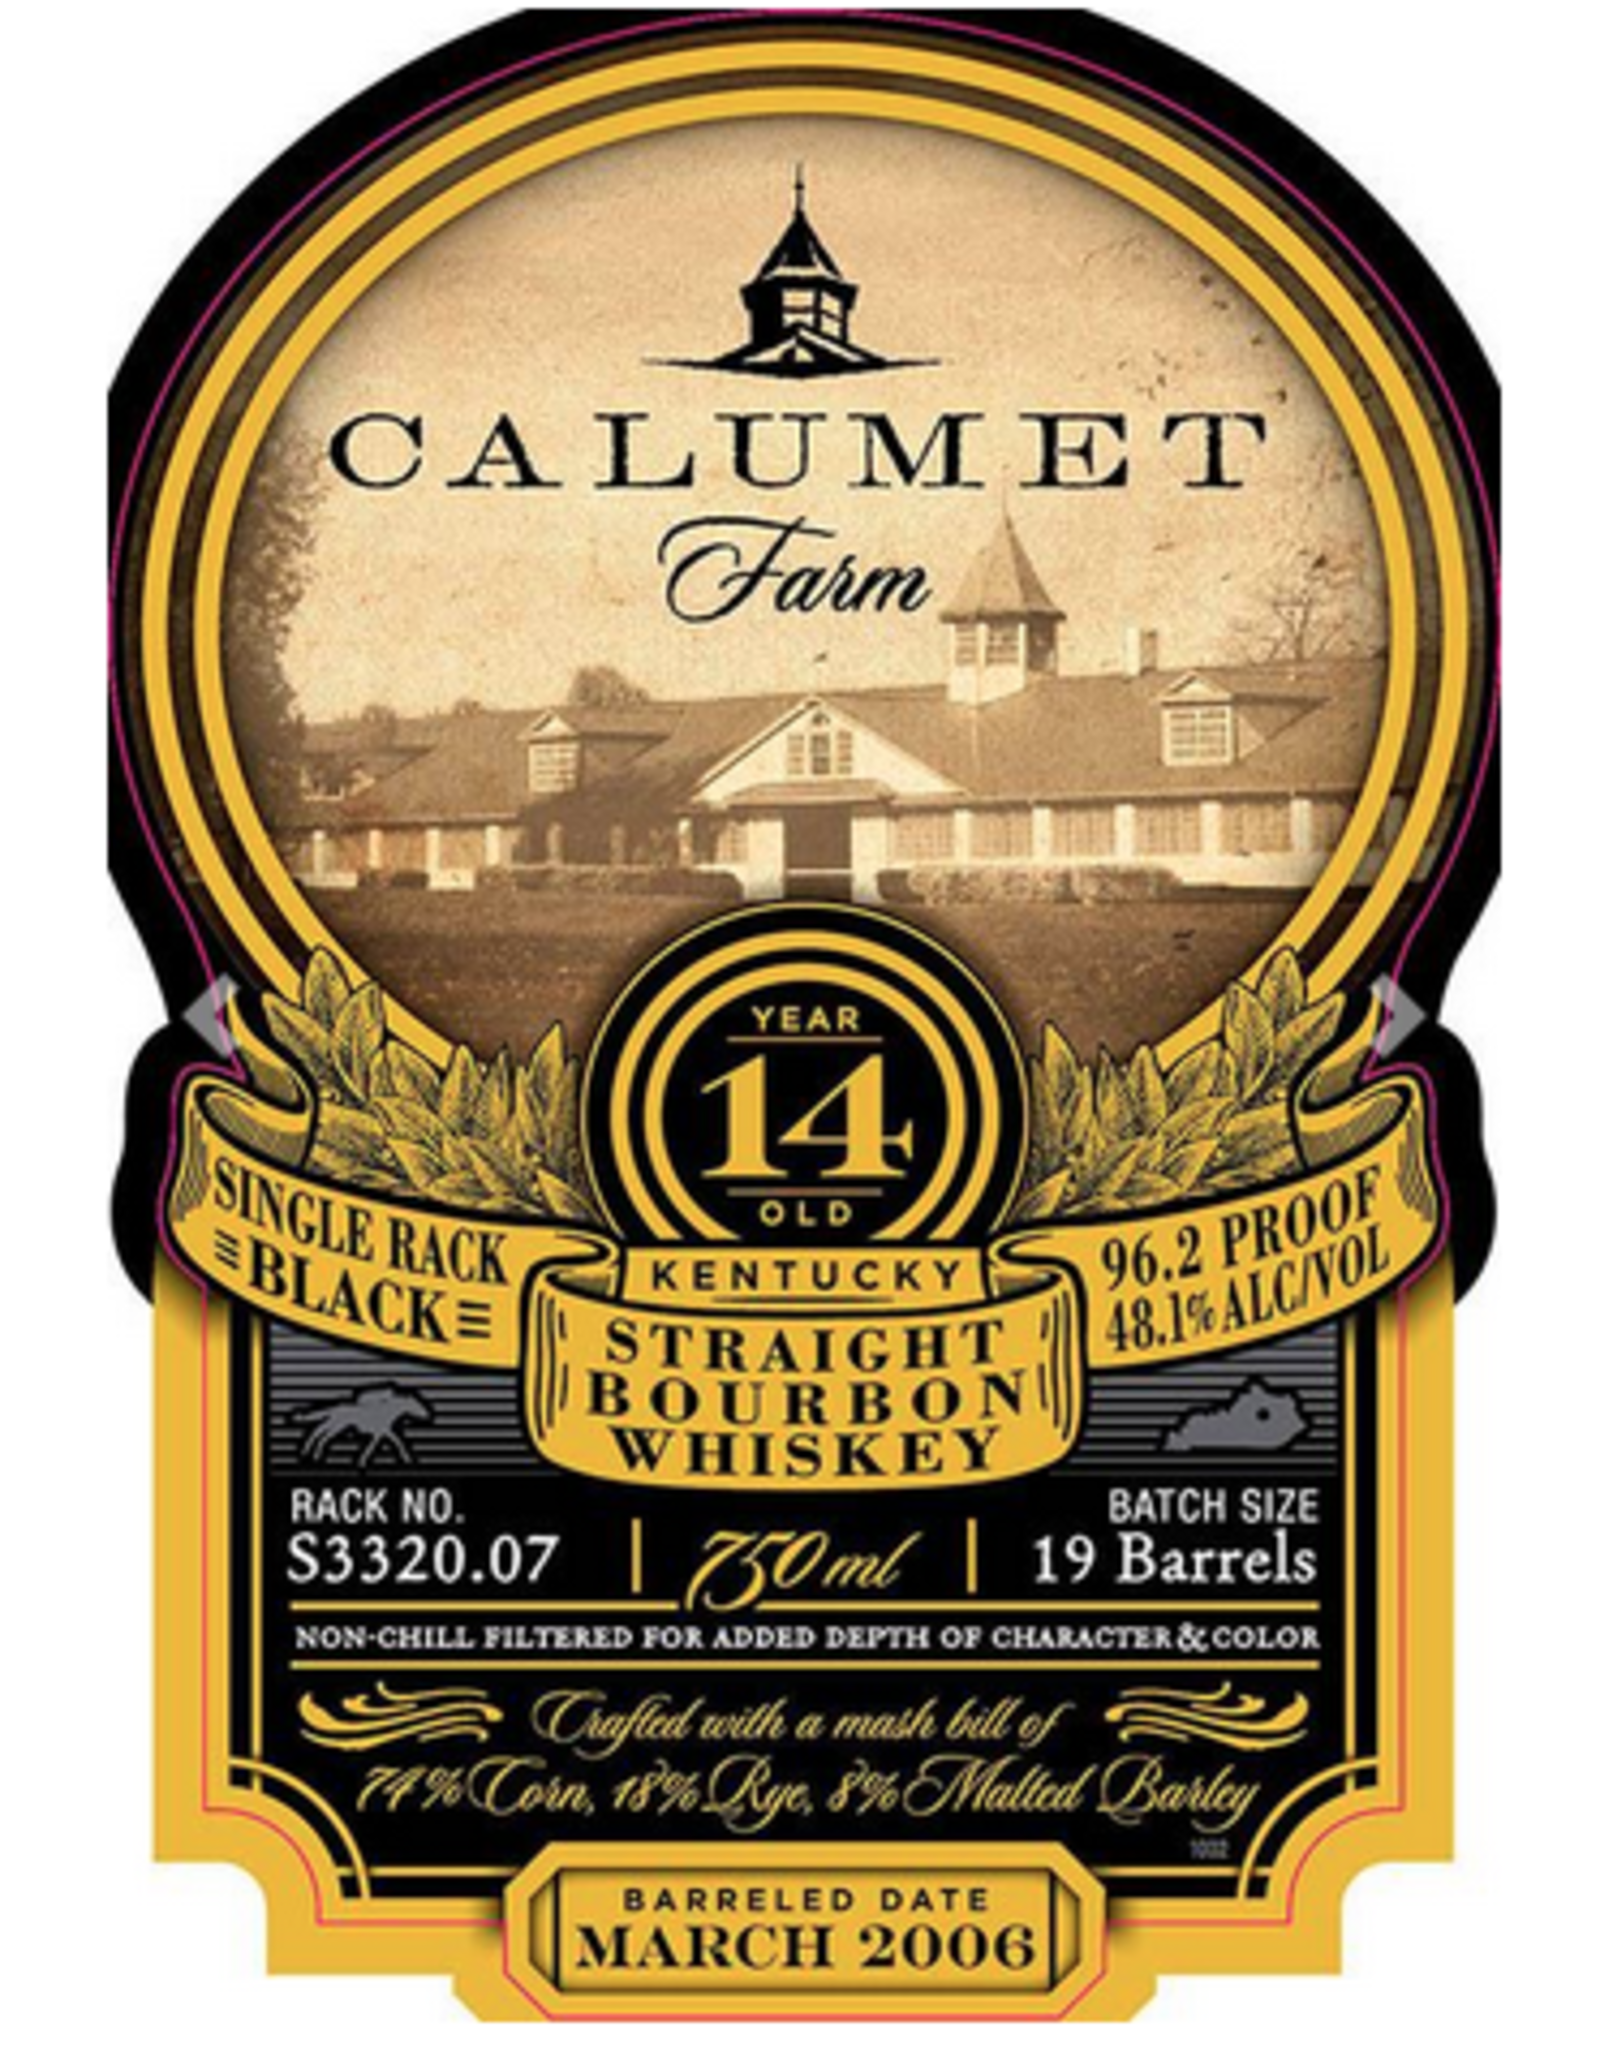 Calumet Single Rack Black Straight Bourbon Whiskey 14Yr 96.2Pf